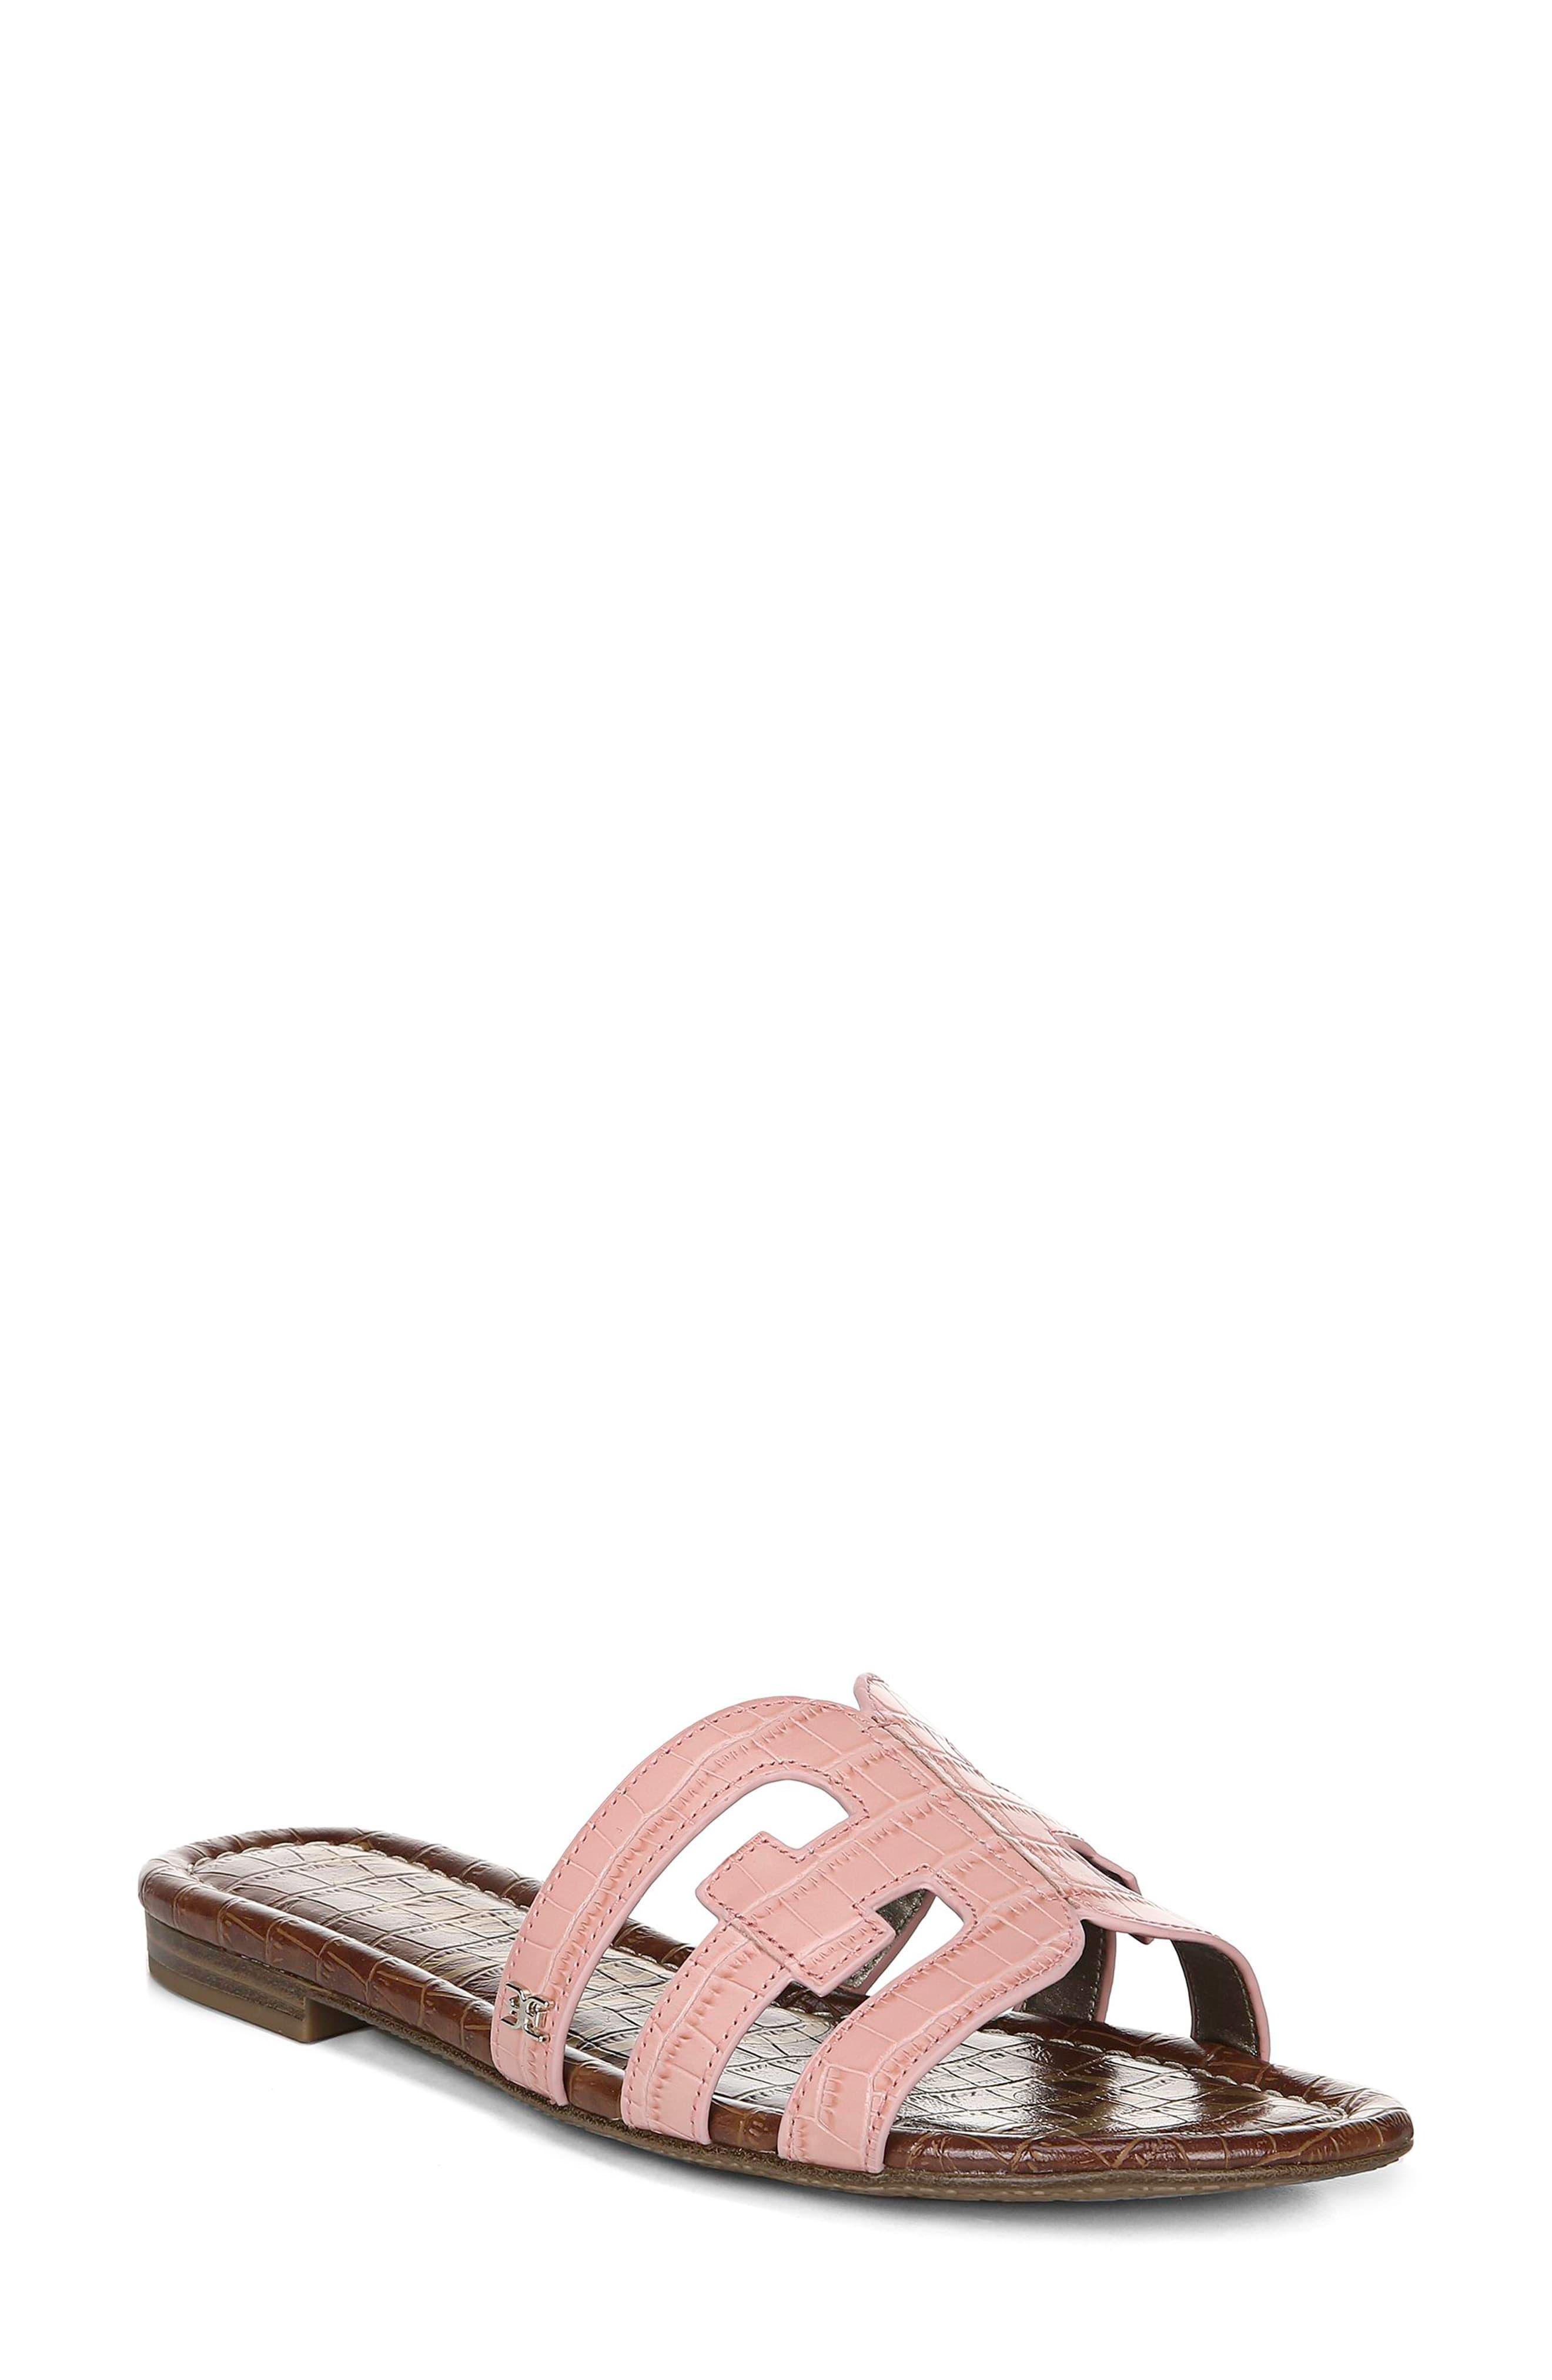 Sam Edelman Bay Cutout Slide Sandal in Pink - Lyst